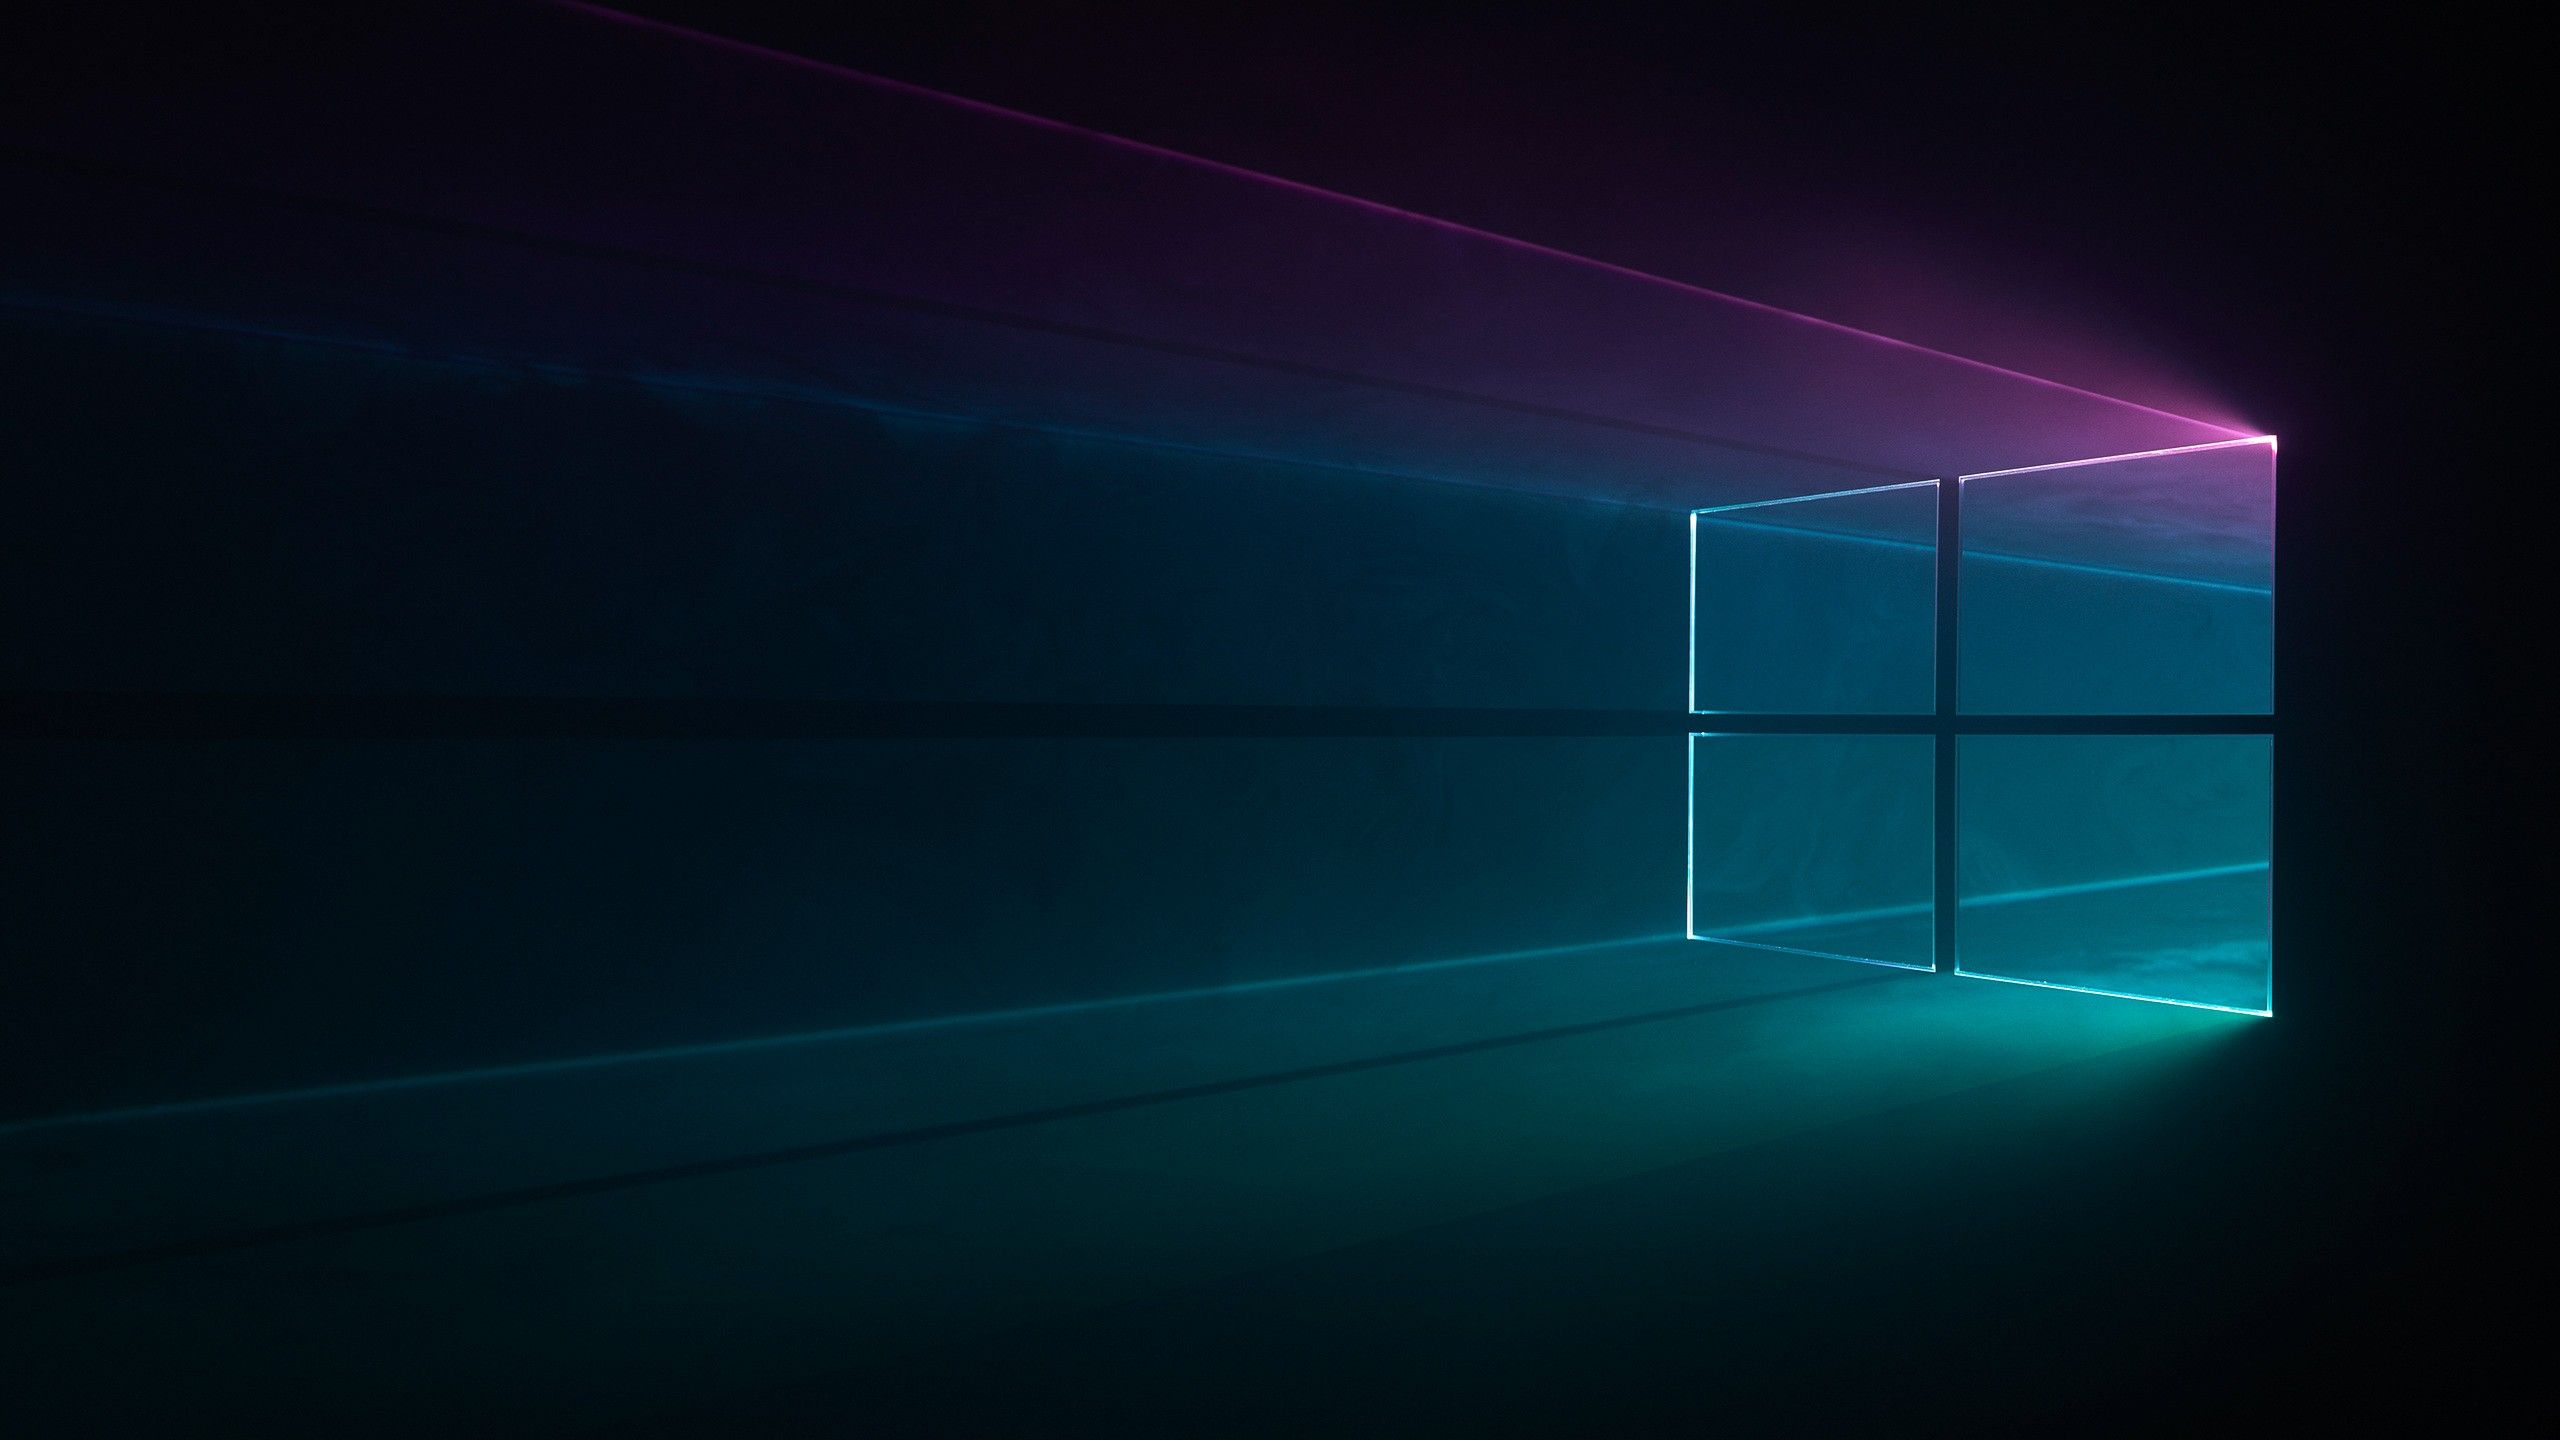 Windows 10 4K Wallpaper, Microsoft Windows, Colorful, Black background, Technology